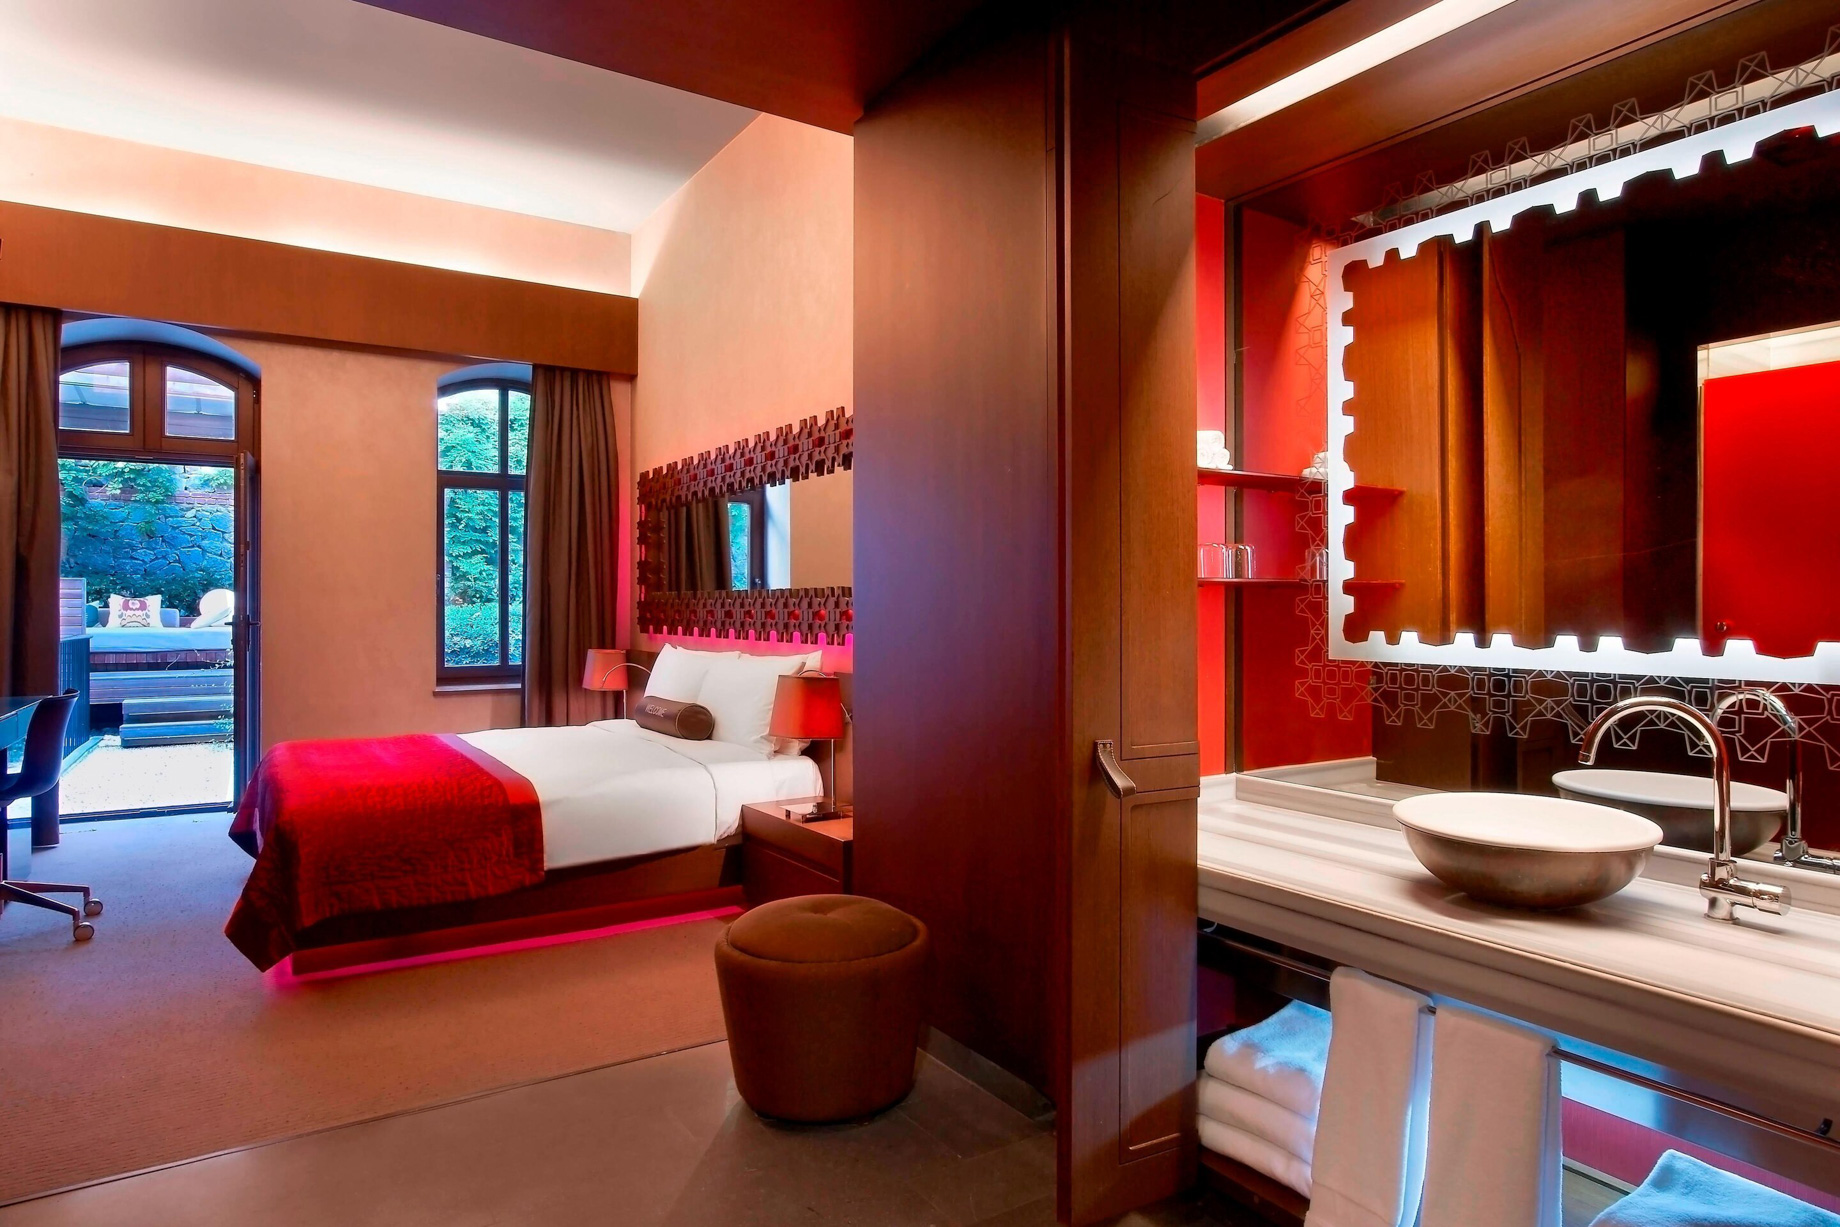 W Istanbul Hotel – Istanbul, Turkey – Marvelous Room Vanity